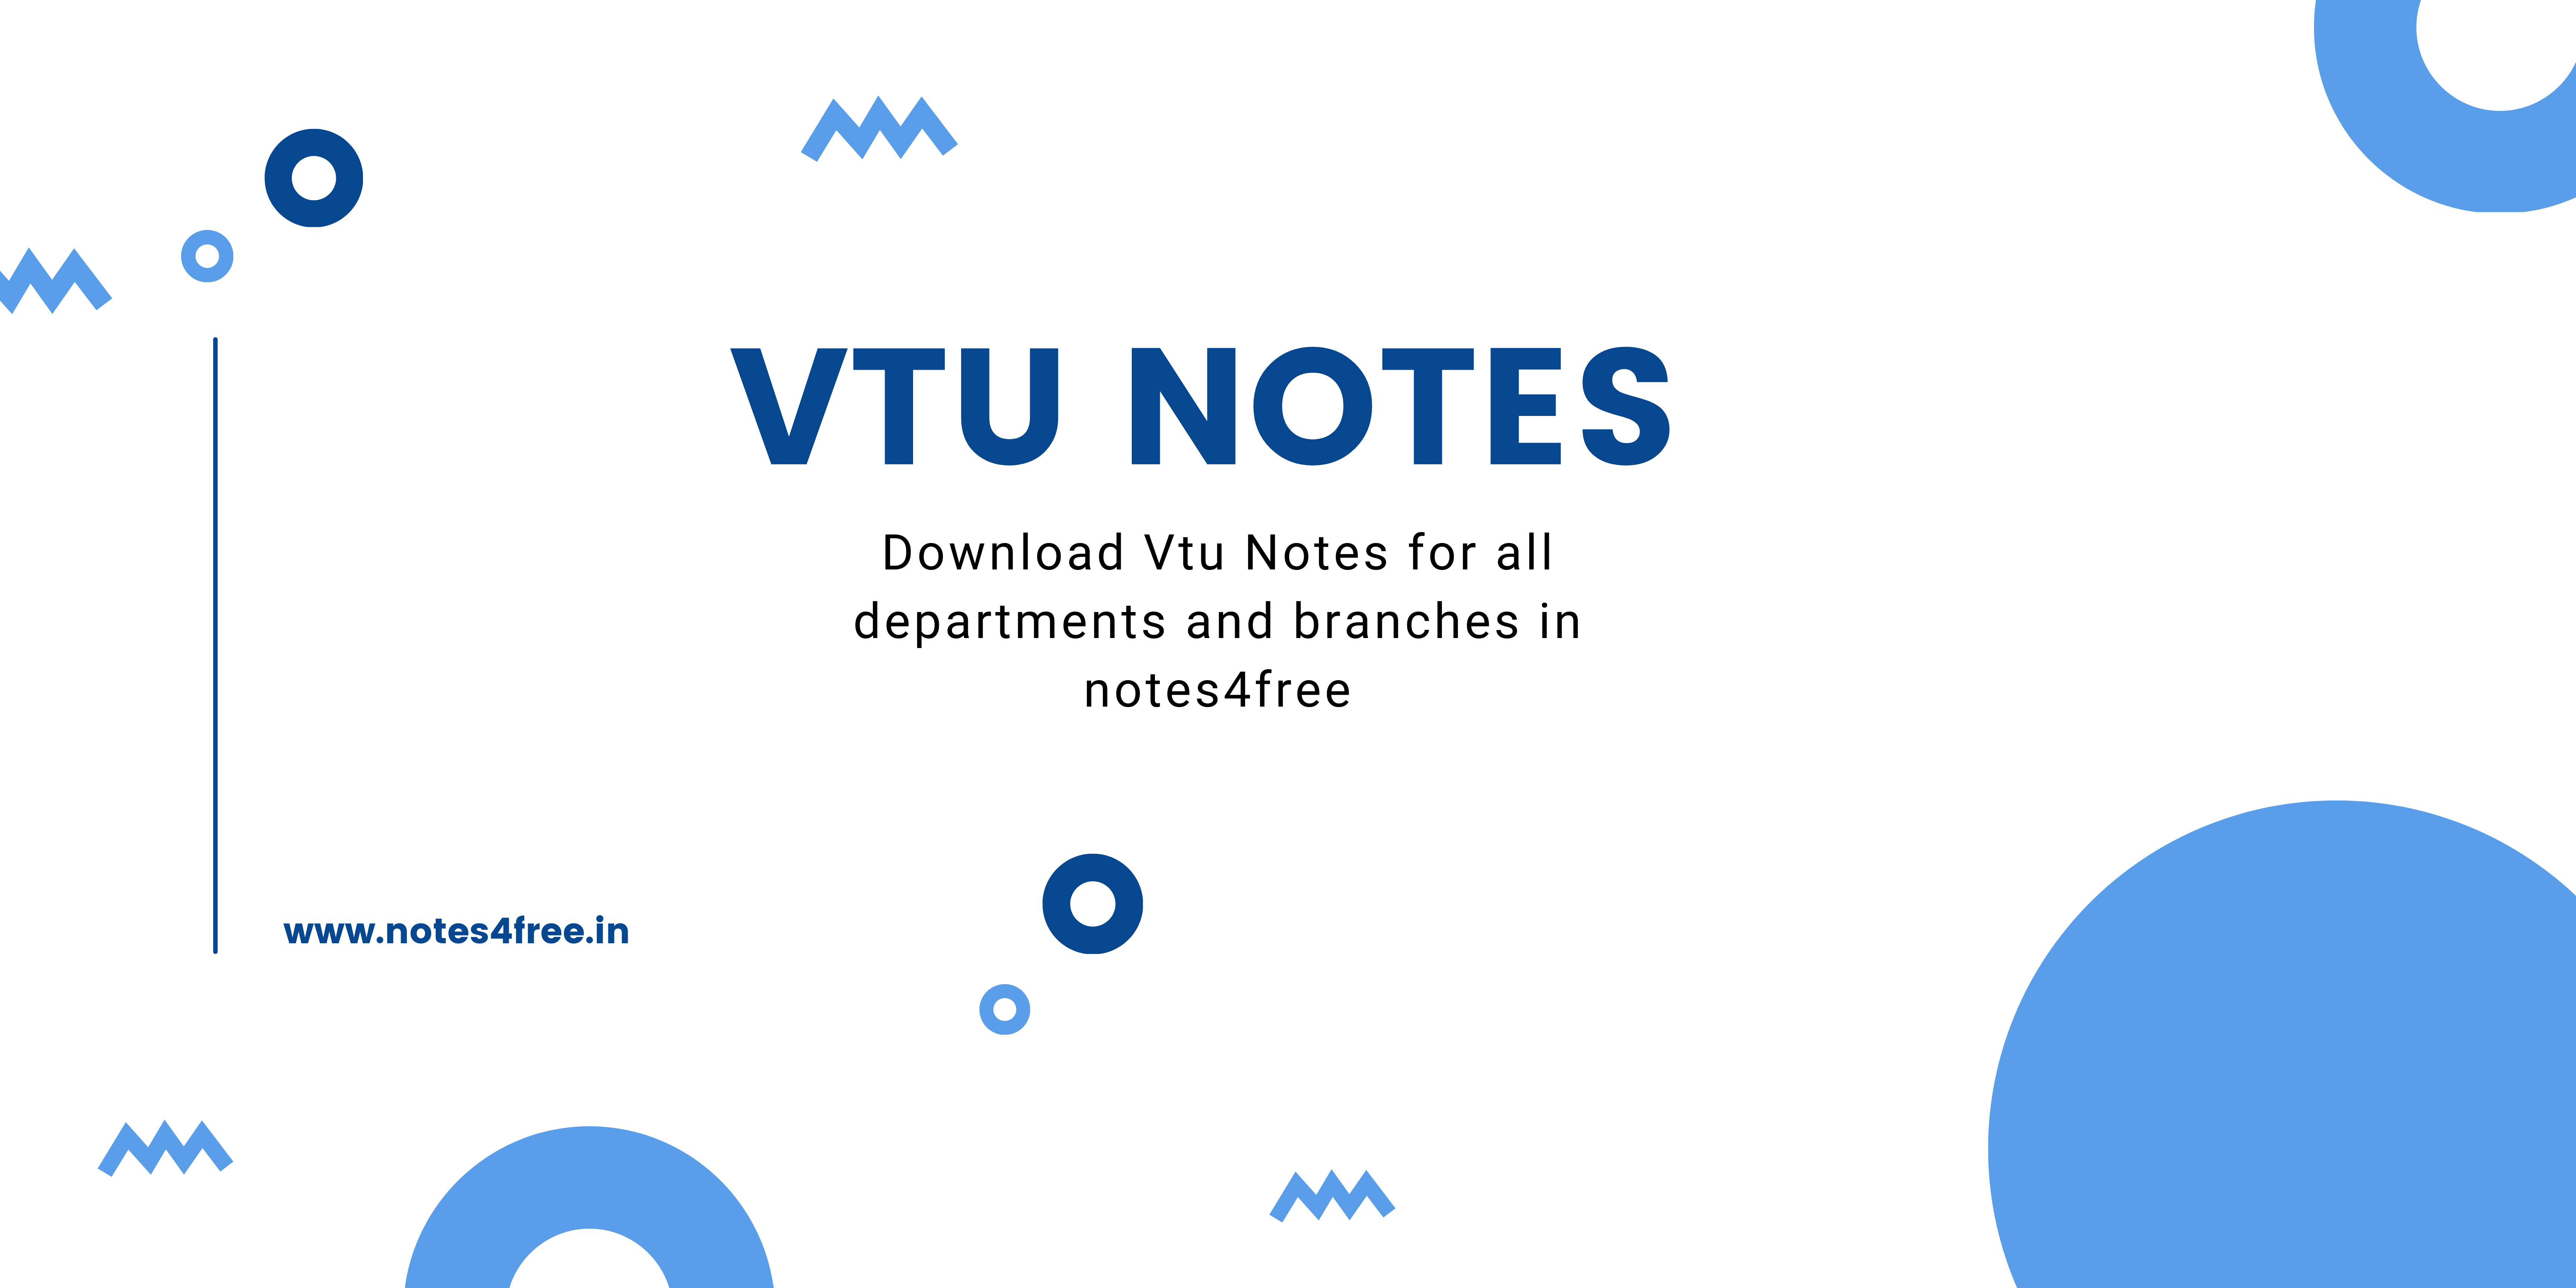  vtu university notes on
        7th SEM        Mechanical Engineering notes 